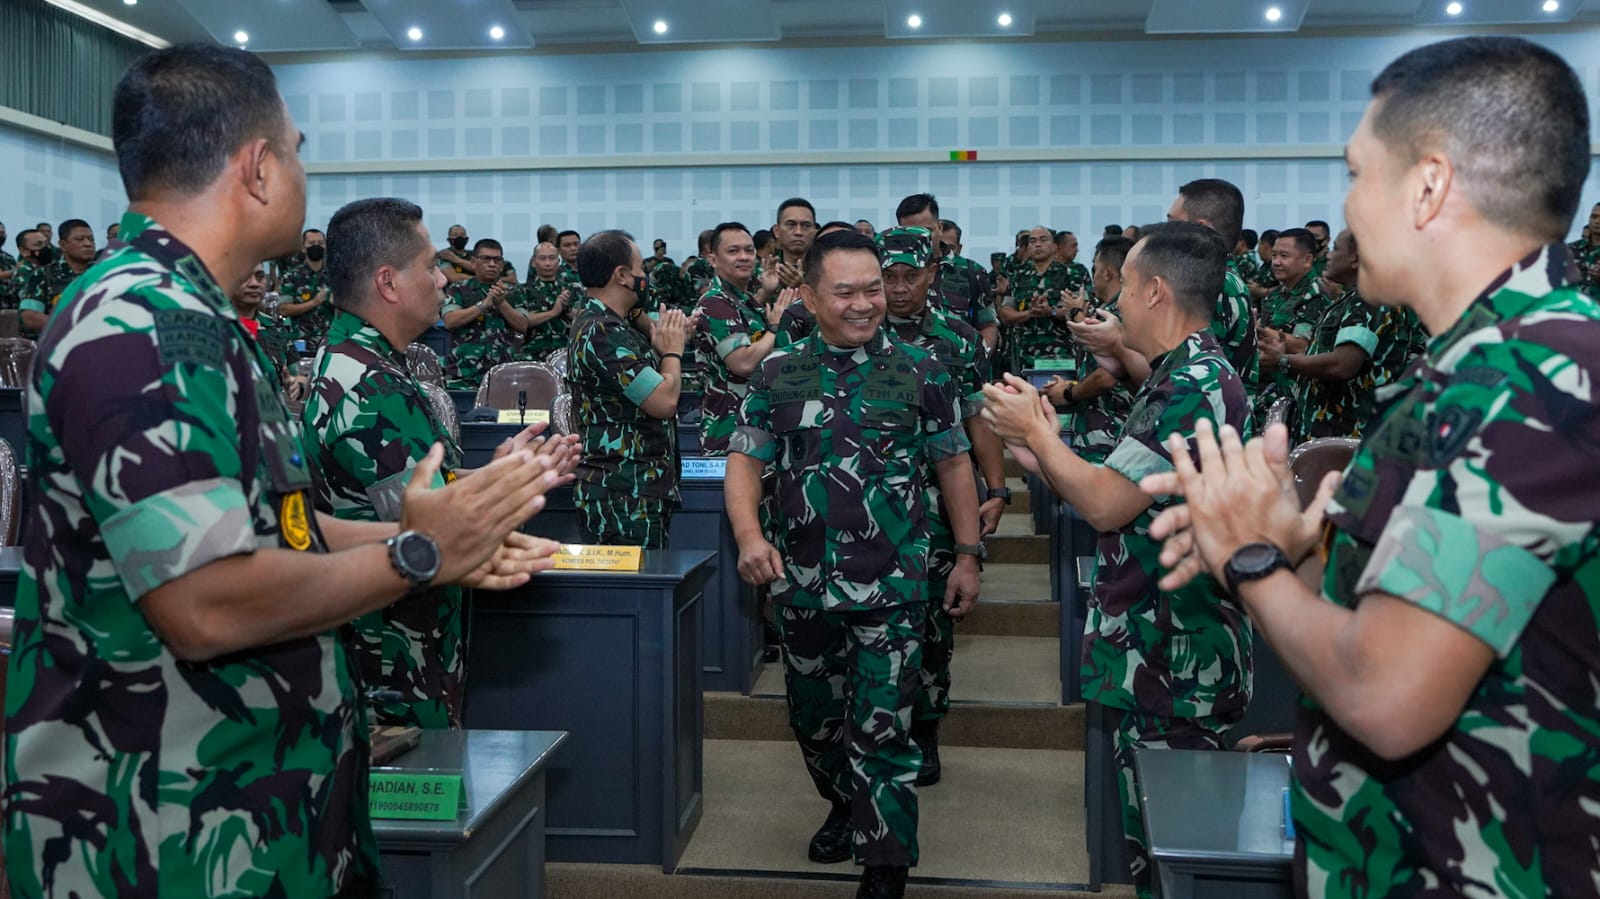 Kunjungan Kepala Staf Angkatan Darat (Kasad) Jenderal TNI Dr. Dudung Abdurachman di Bandung